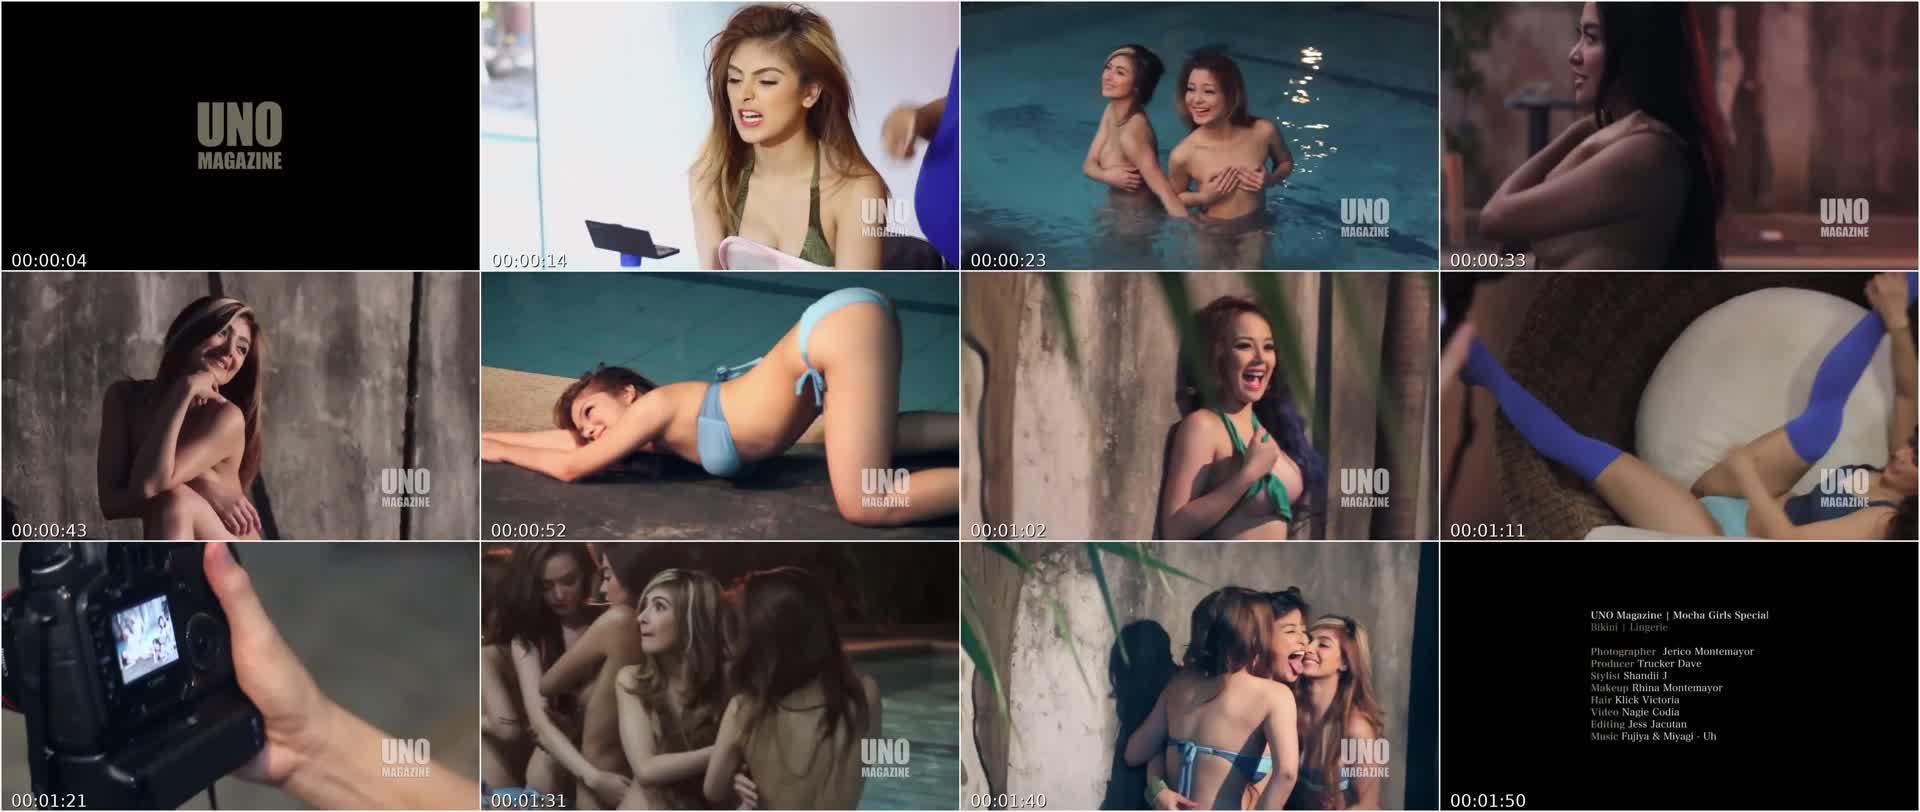 Mocha Girls UNO Magazine Behind the Scene Photoshoot Scandal